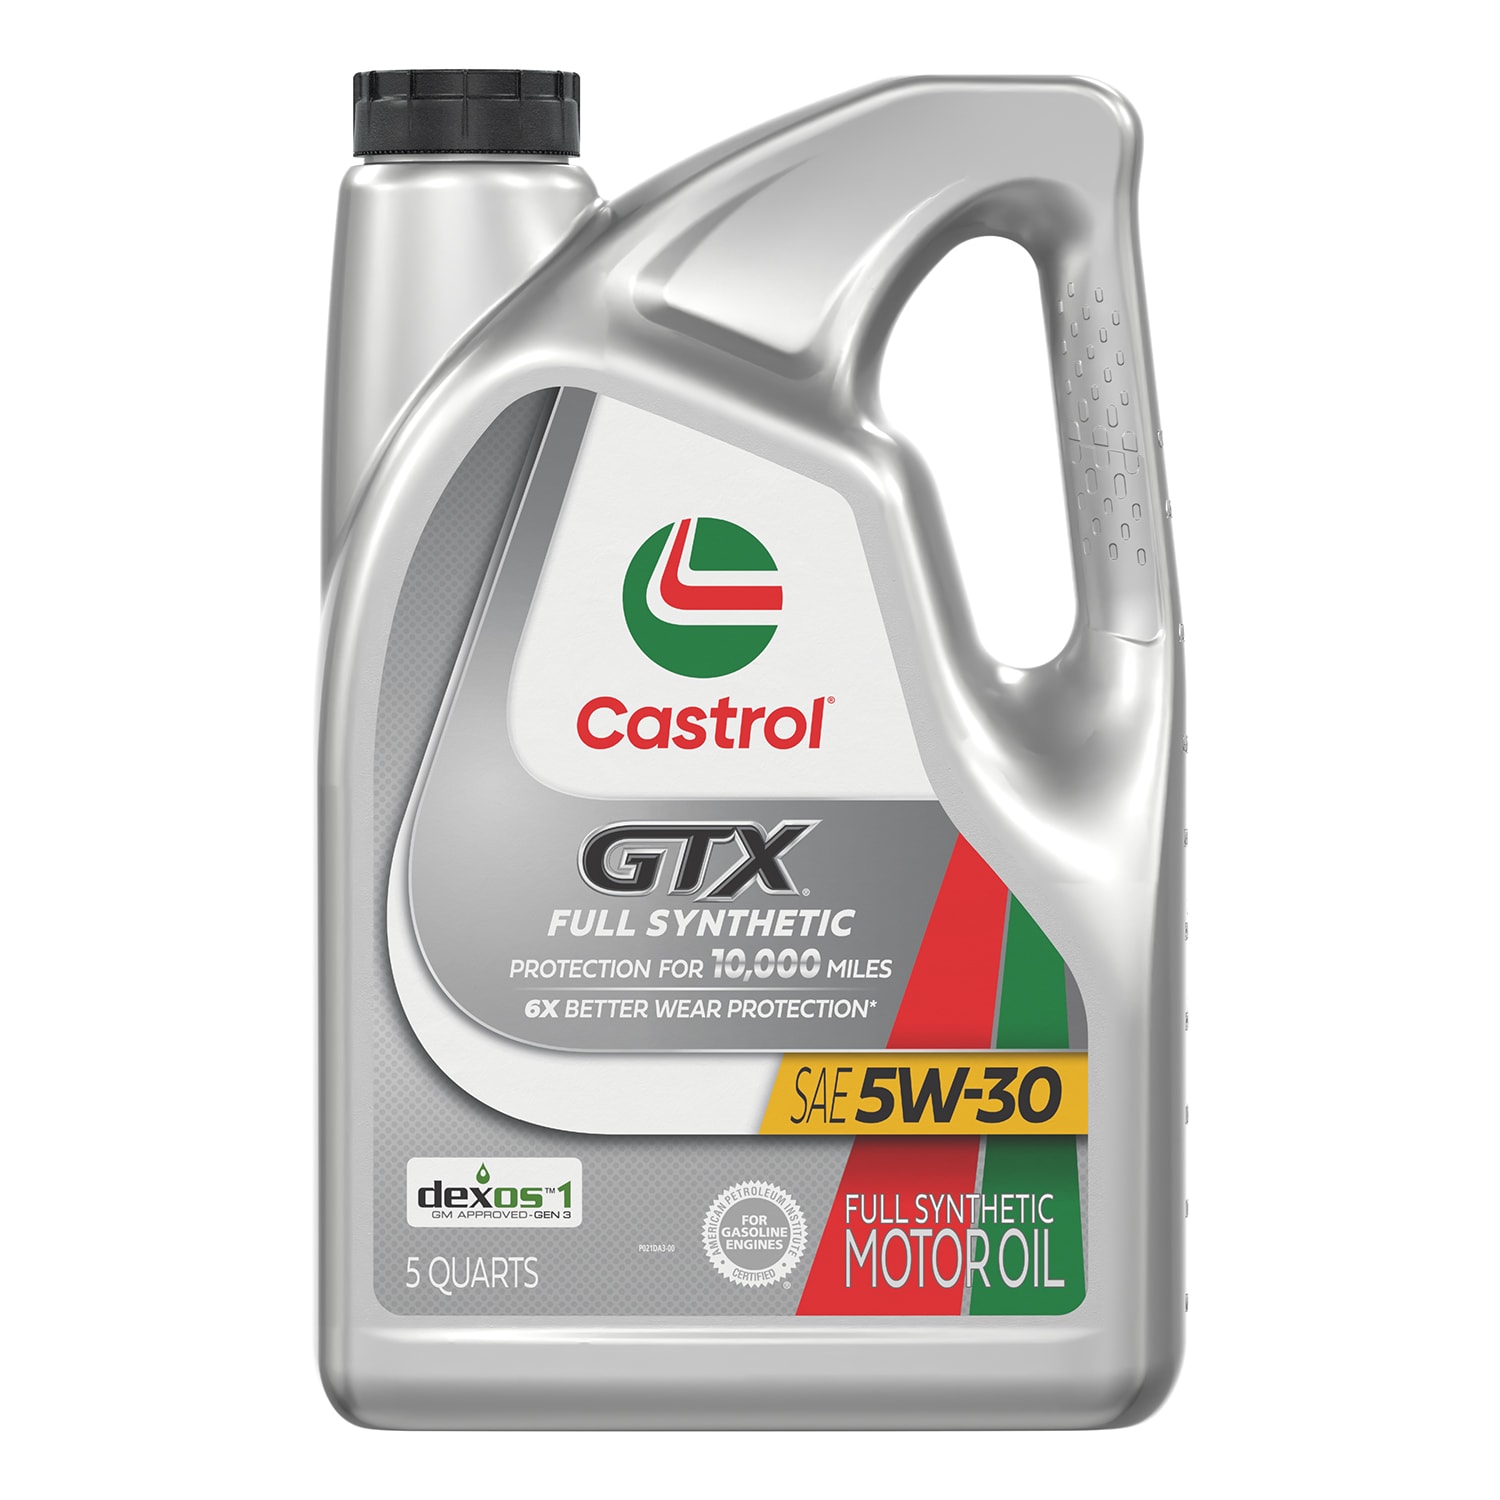 CASTROL Gtx Full Synthetic 5w-30 Motor Oil